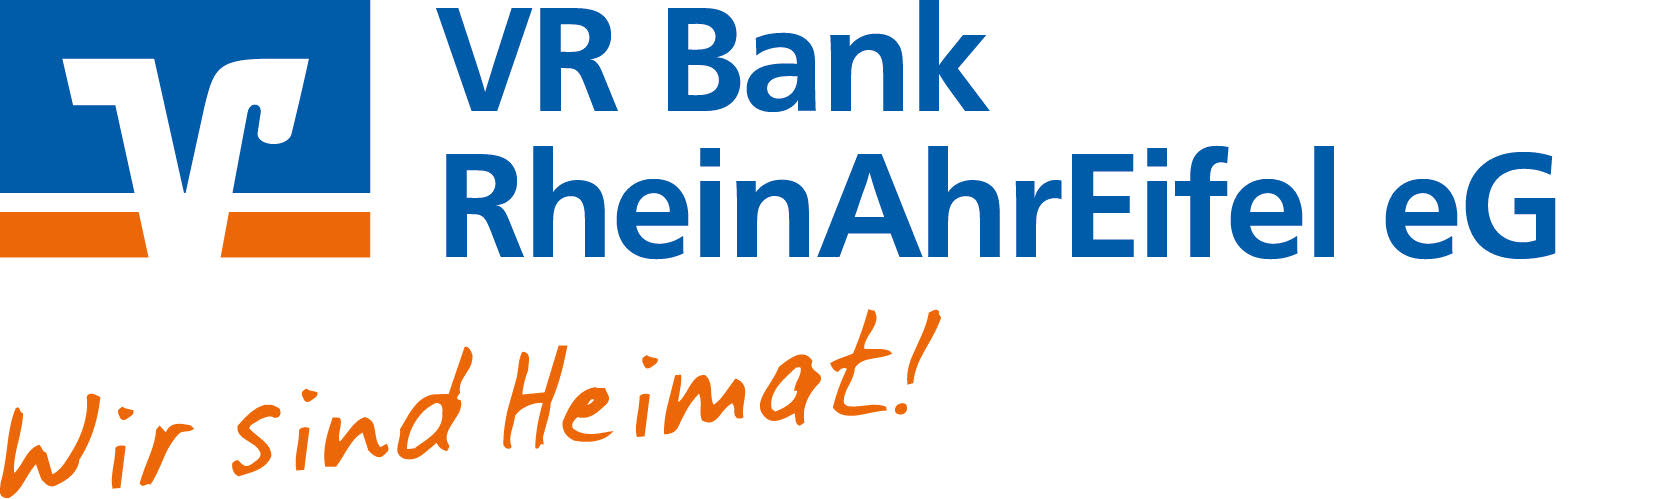 Volksbank Logo